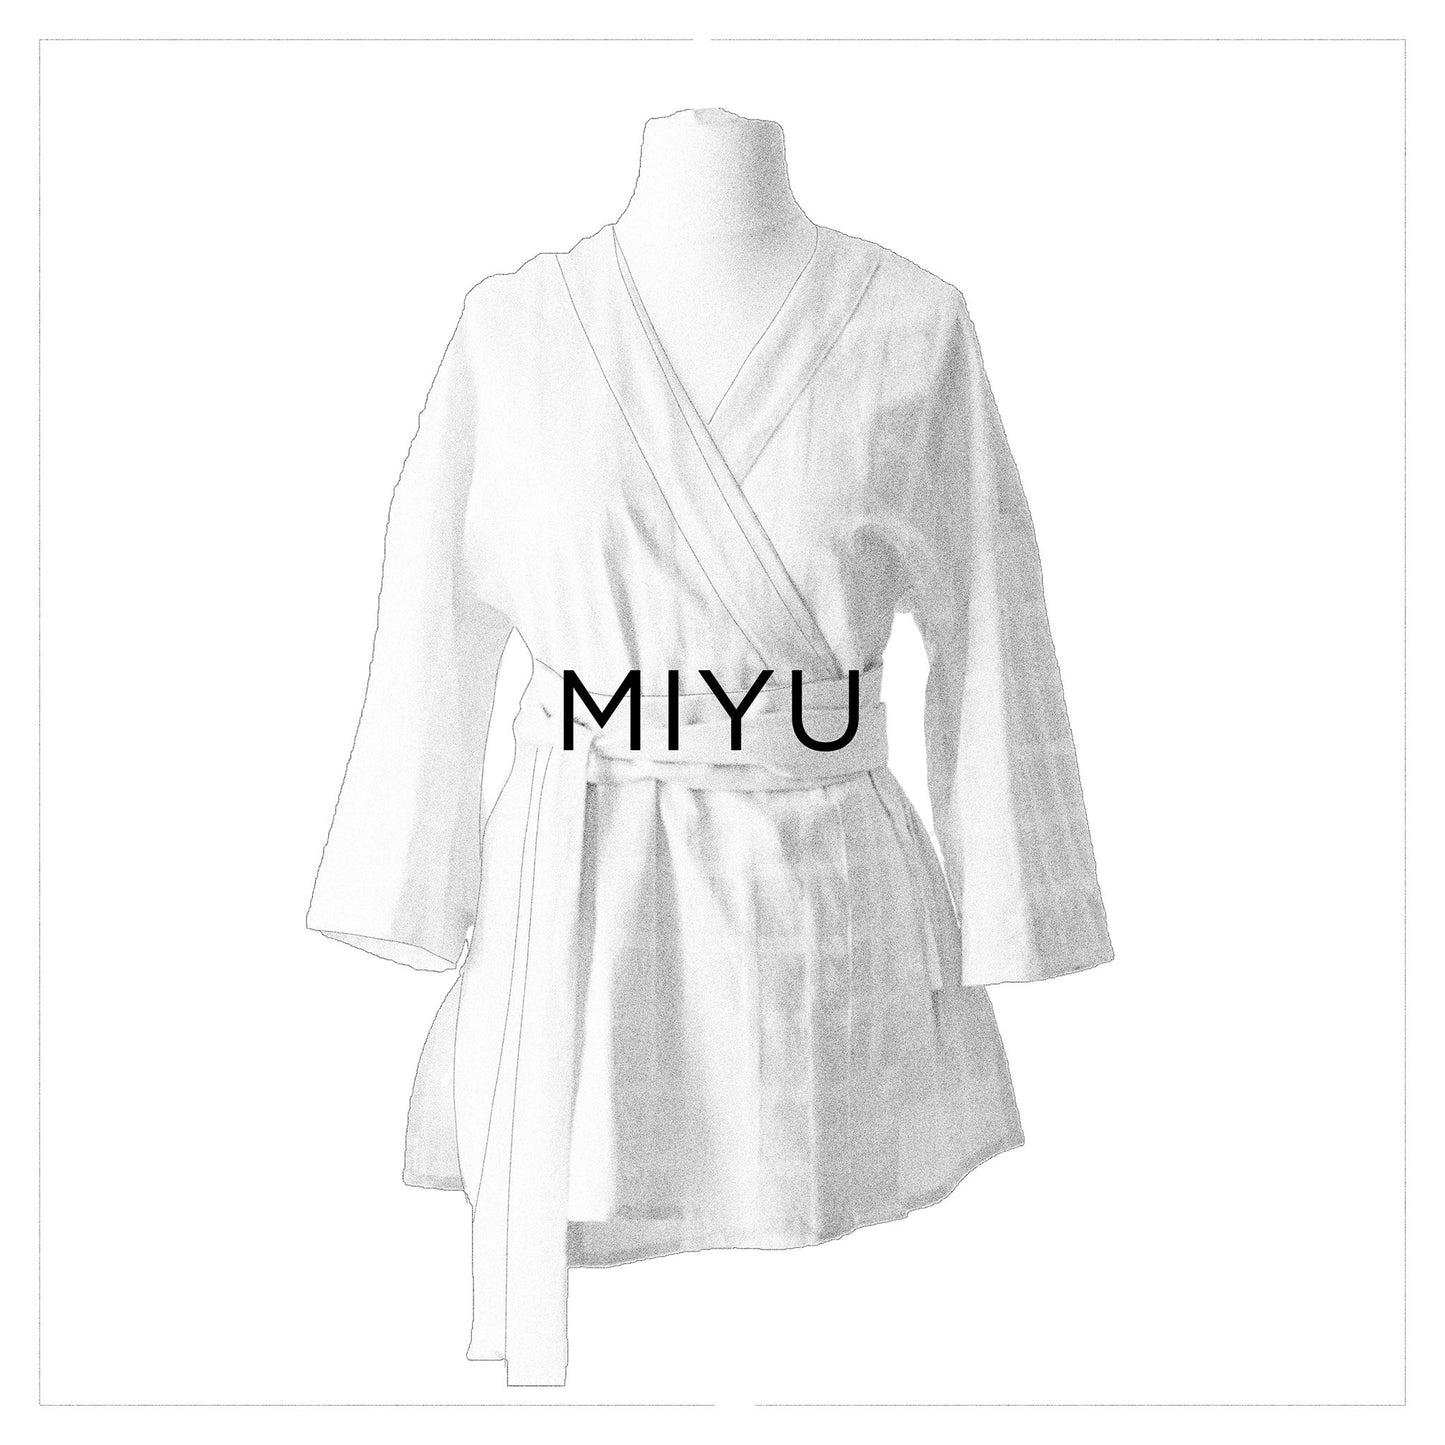 Made-to-order: Miyu – Blau